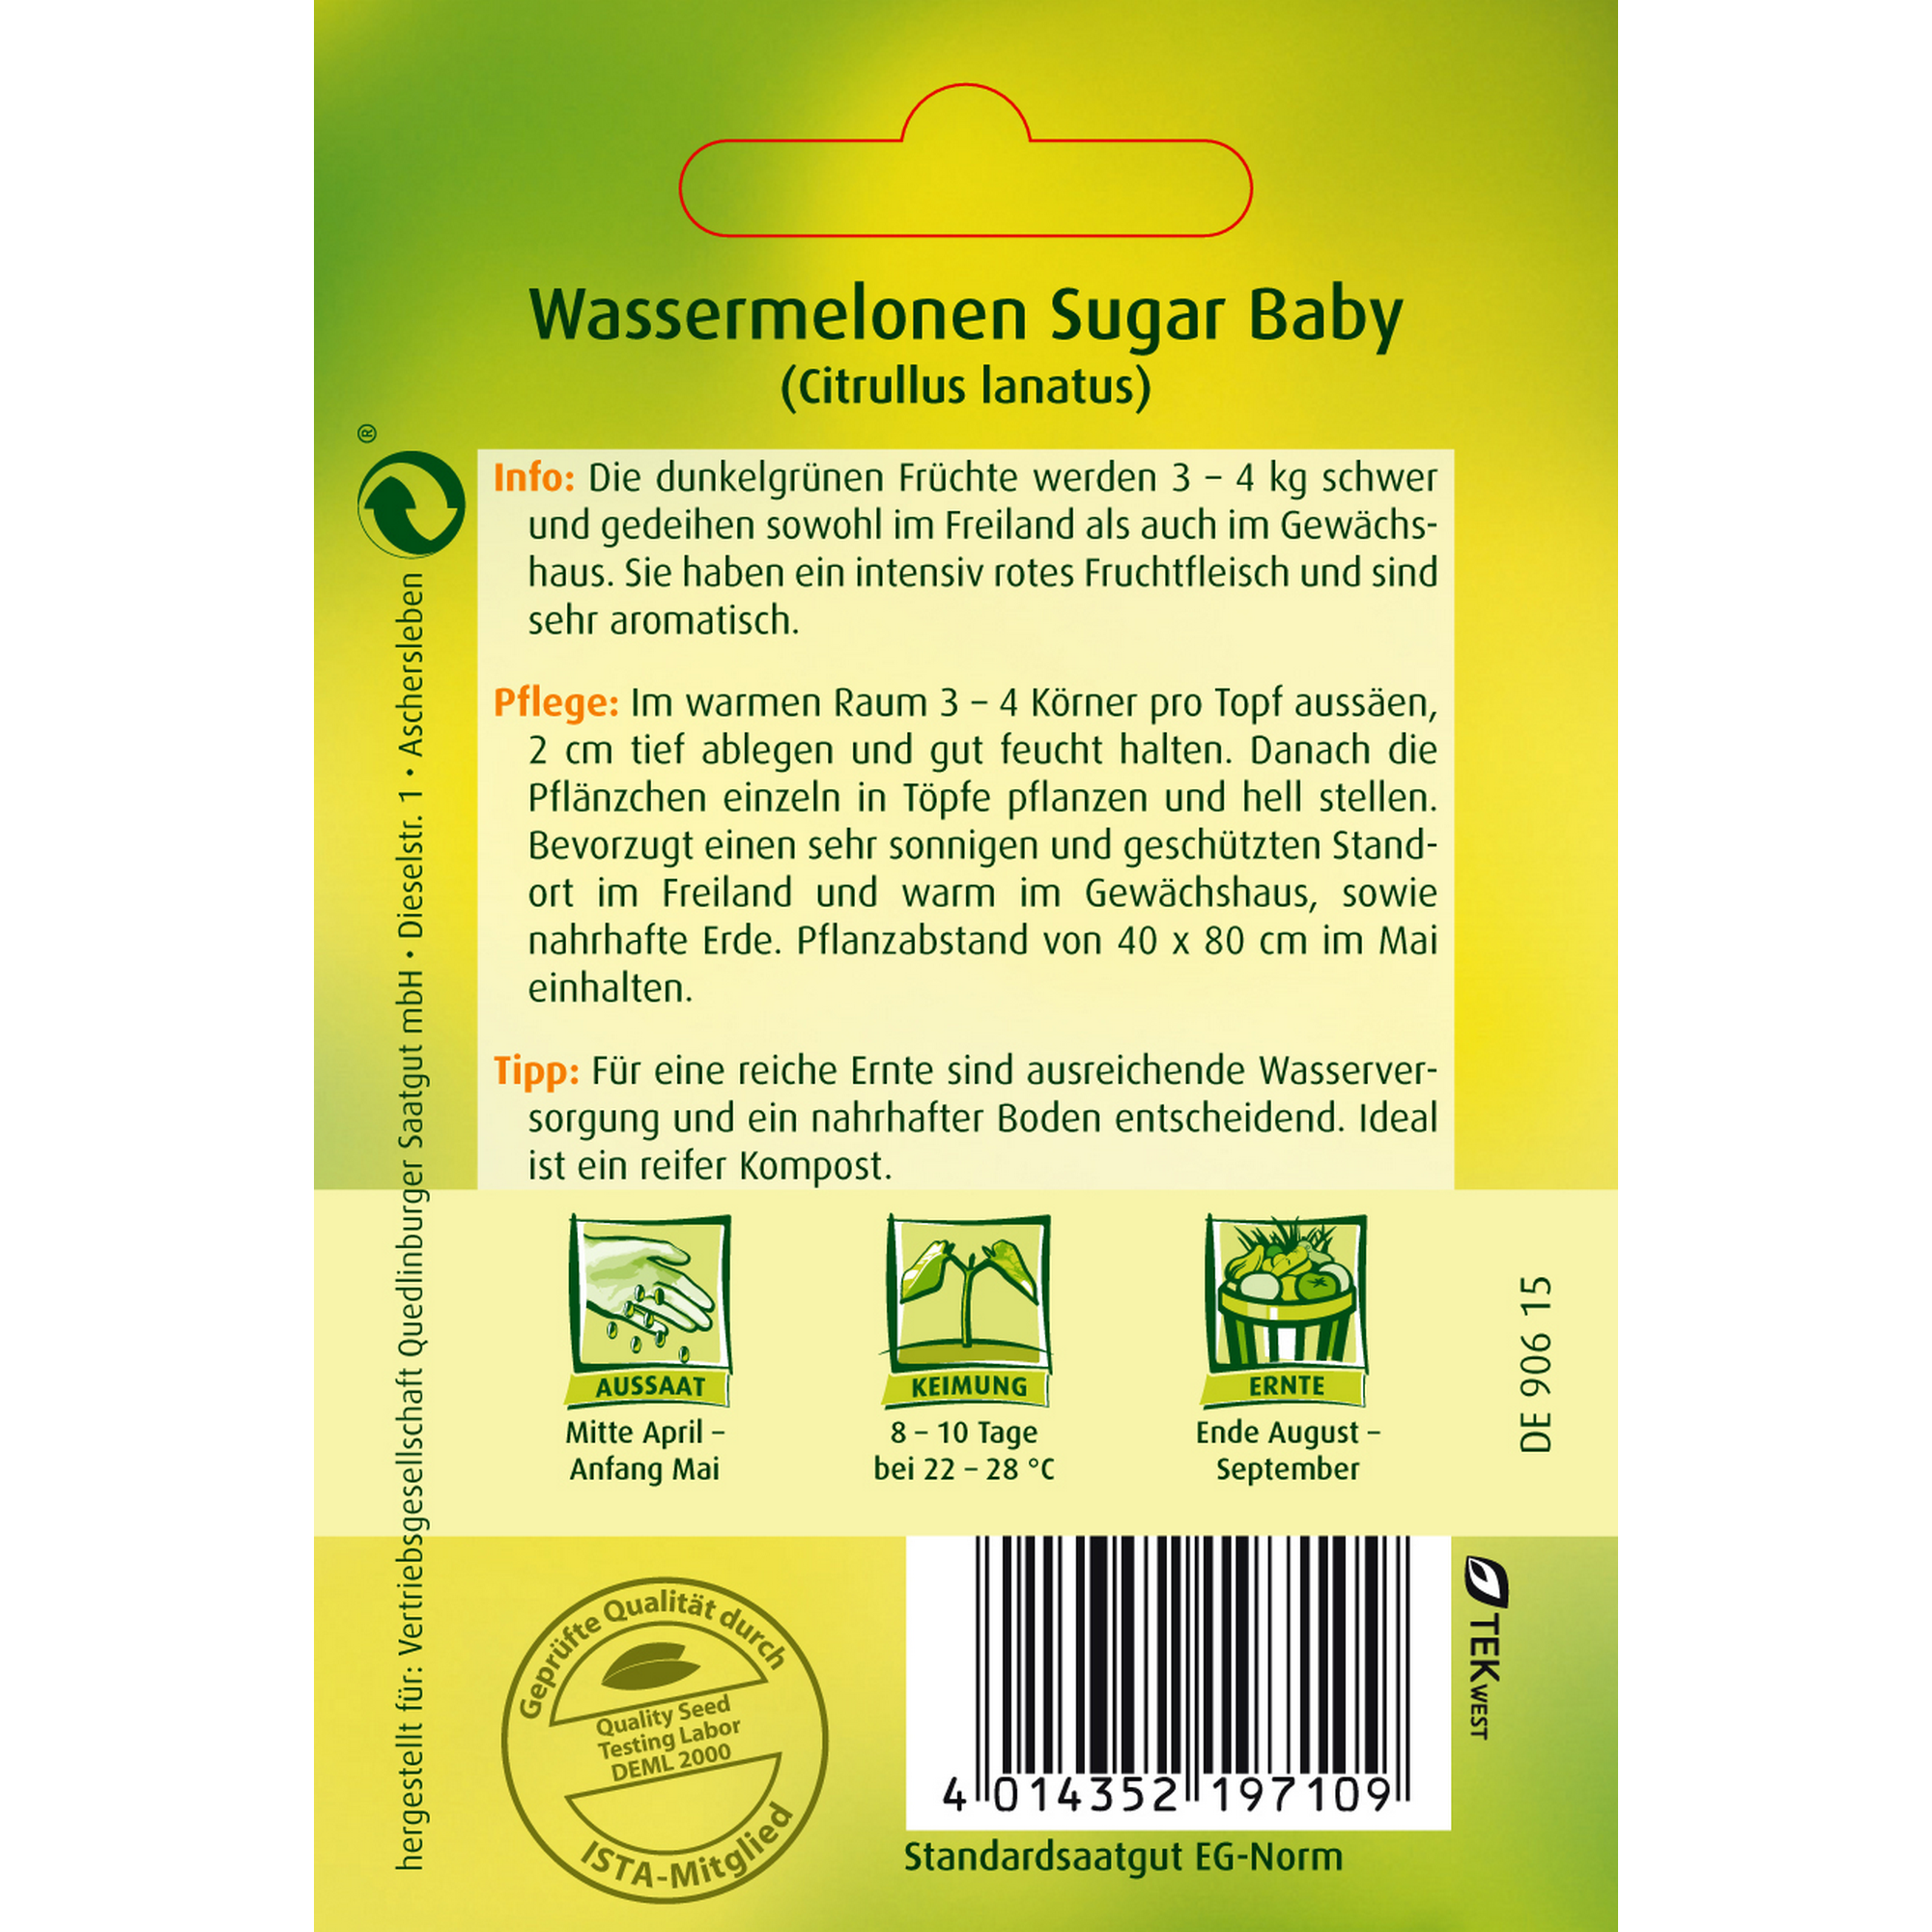 Wassermelonen 'Sugar Baby' + product picture